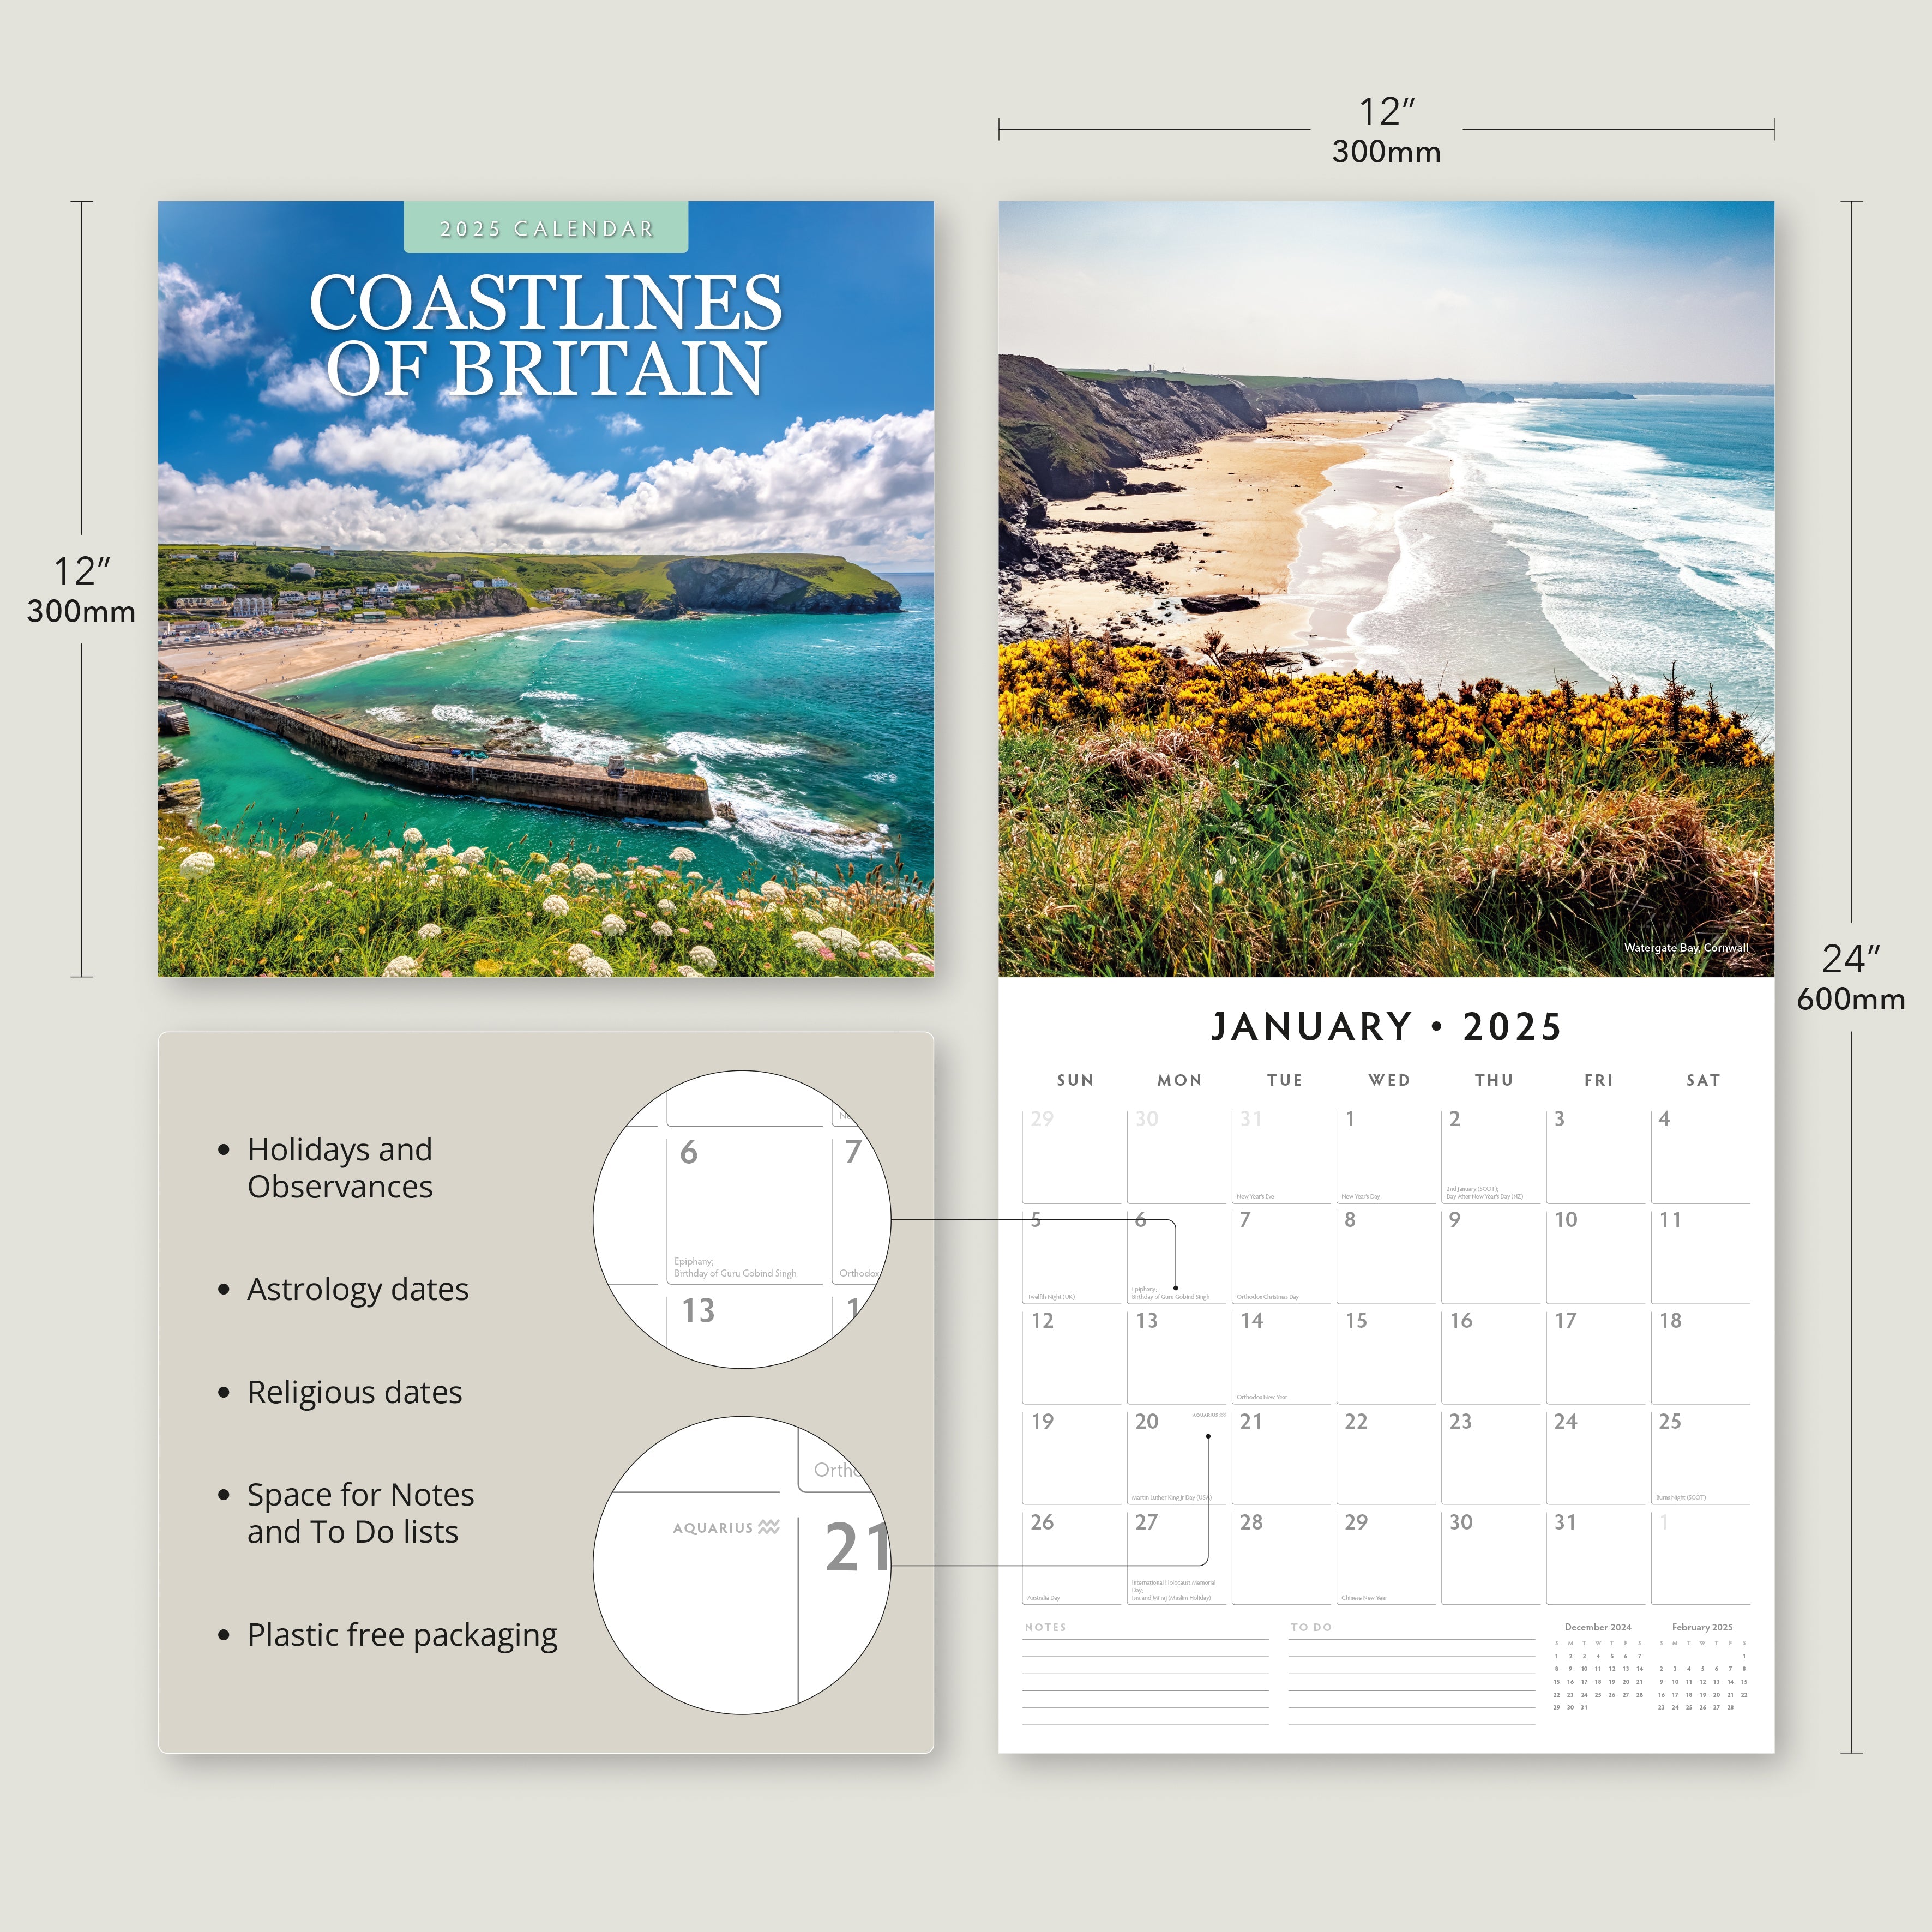 2025 Coastlines of Britain - Square Wall Calendar